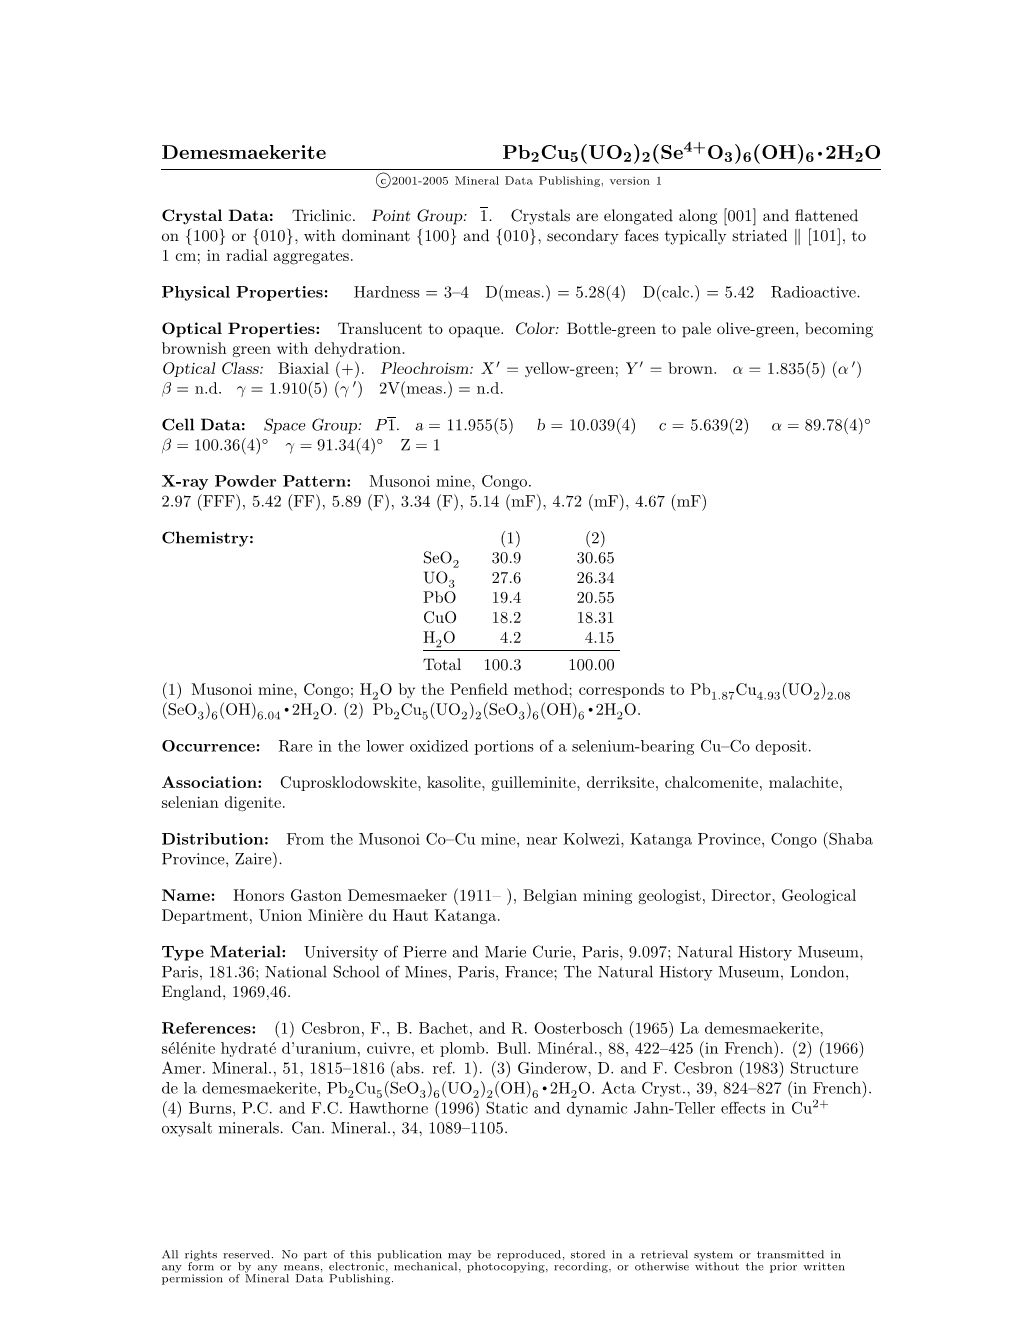 Demesmaekerite Pb2cu5(UO2)2(Se O3)6(OH)6 • 2H2O C 2001-2005 Mineral Data Publishing, Version 1